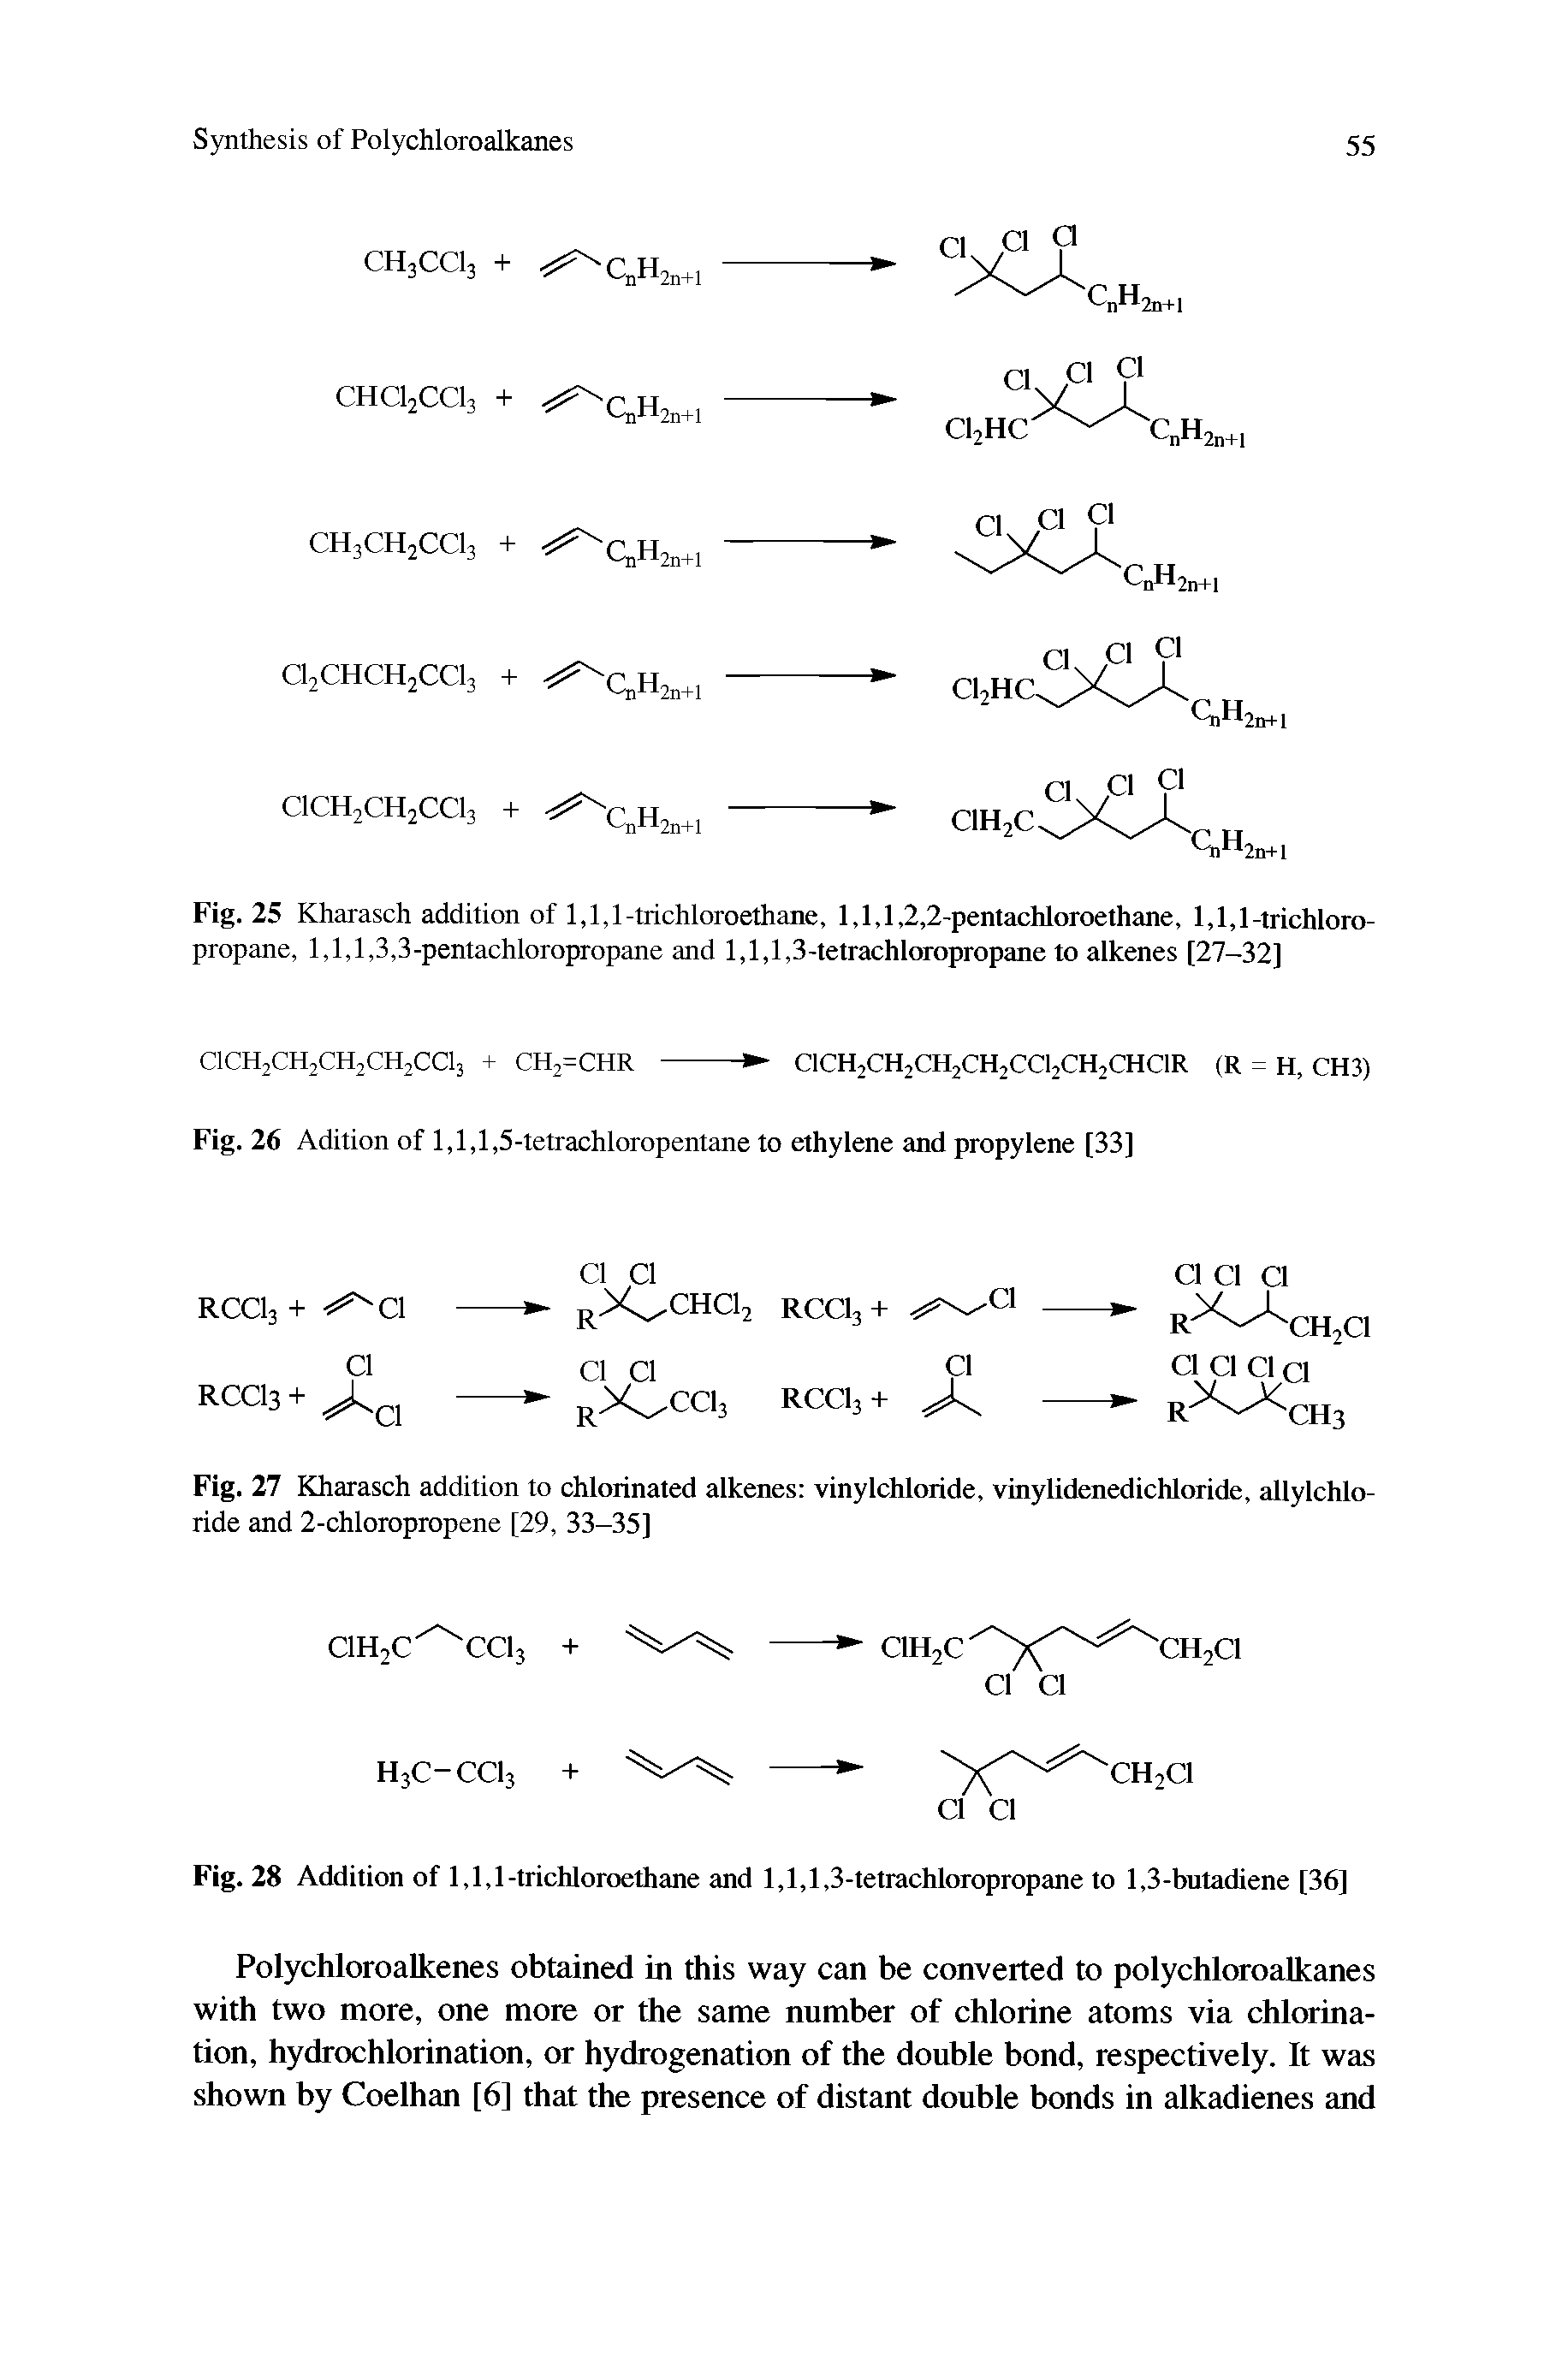 Fig. 27 Kharasch addition to chlorinated alkenes vinylchloride, vinylidenedichloride, allylchlo-ride and 2-chloropropene [29, 33-35]...